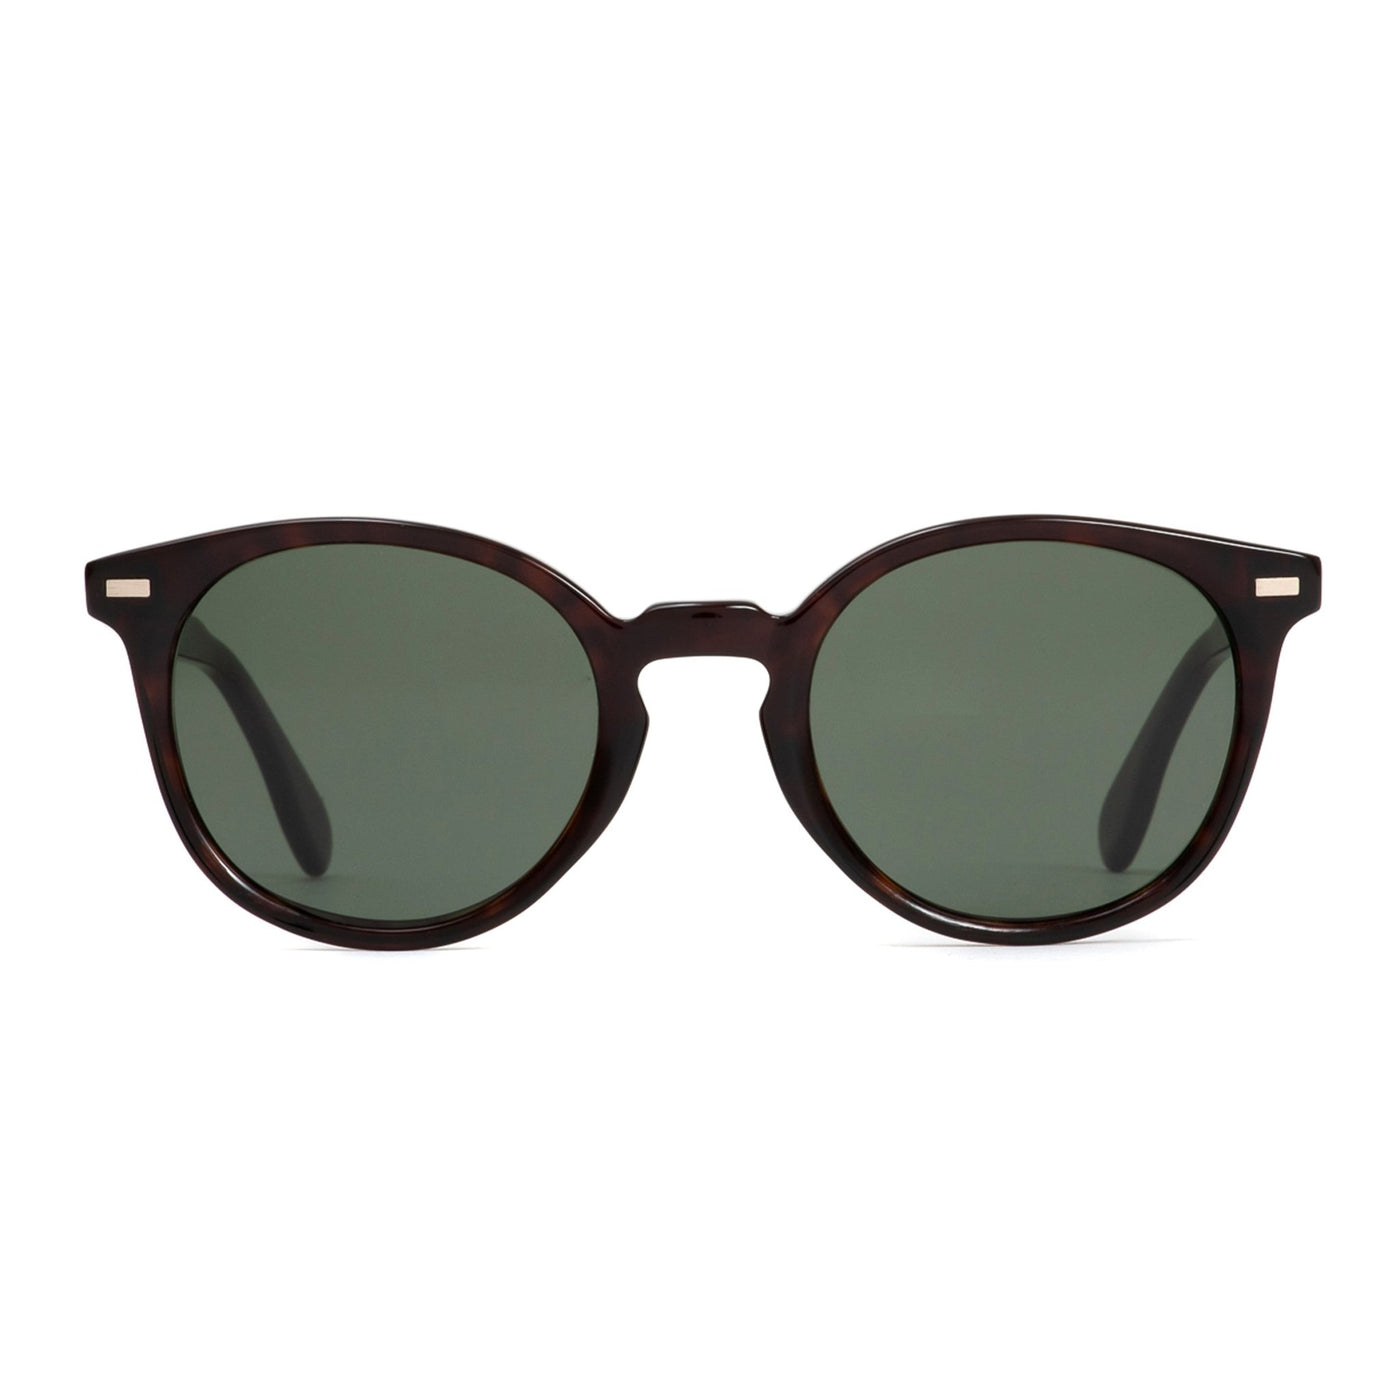 Black round sunglasses with brown lenses by OTIS Eyewear